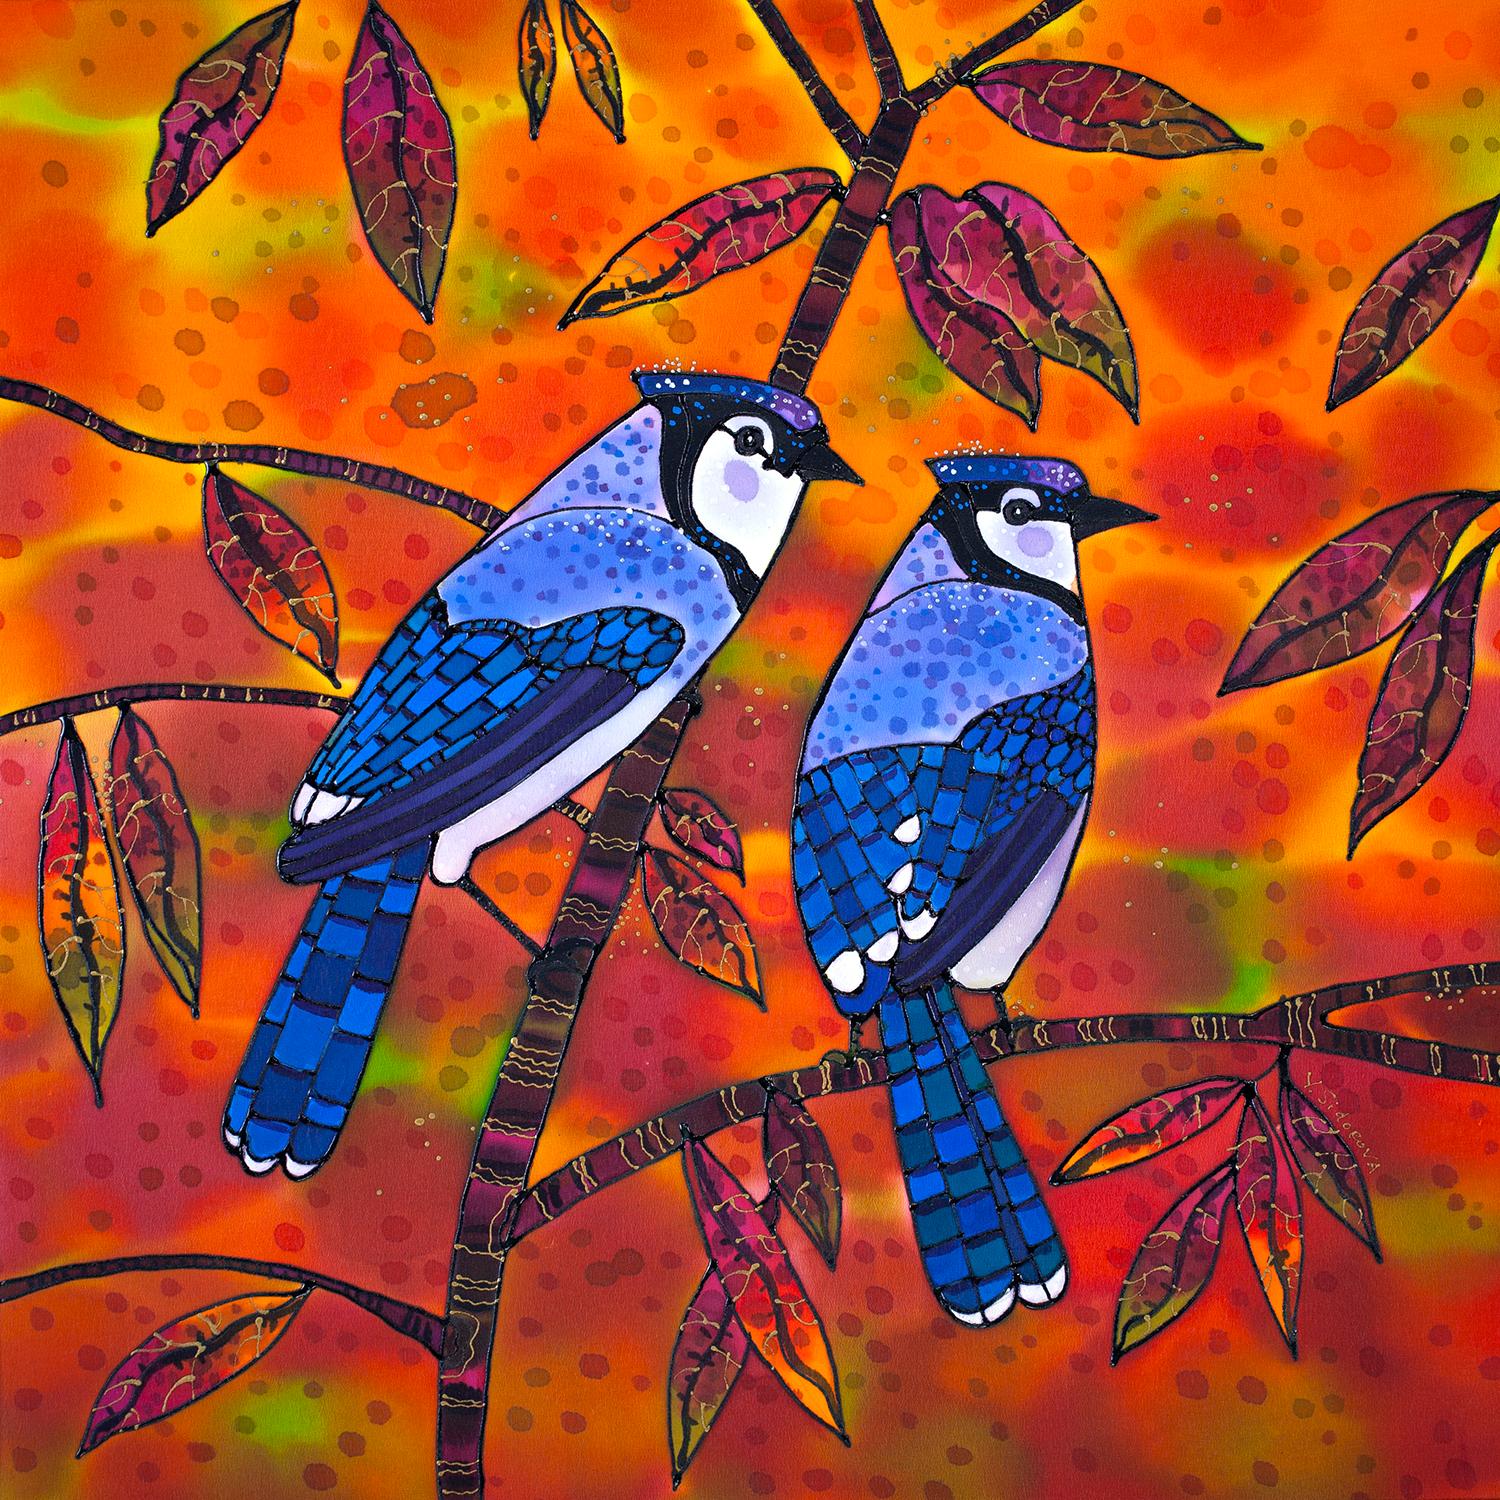 Blue Jays through the Prism of Autumn - Mixed Media Art by Yelena Sidorova